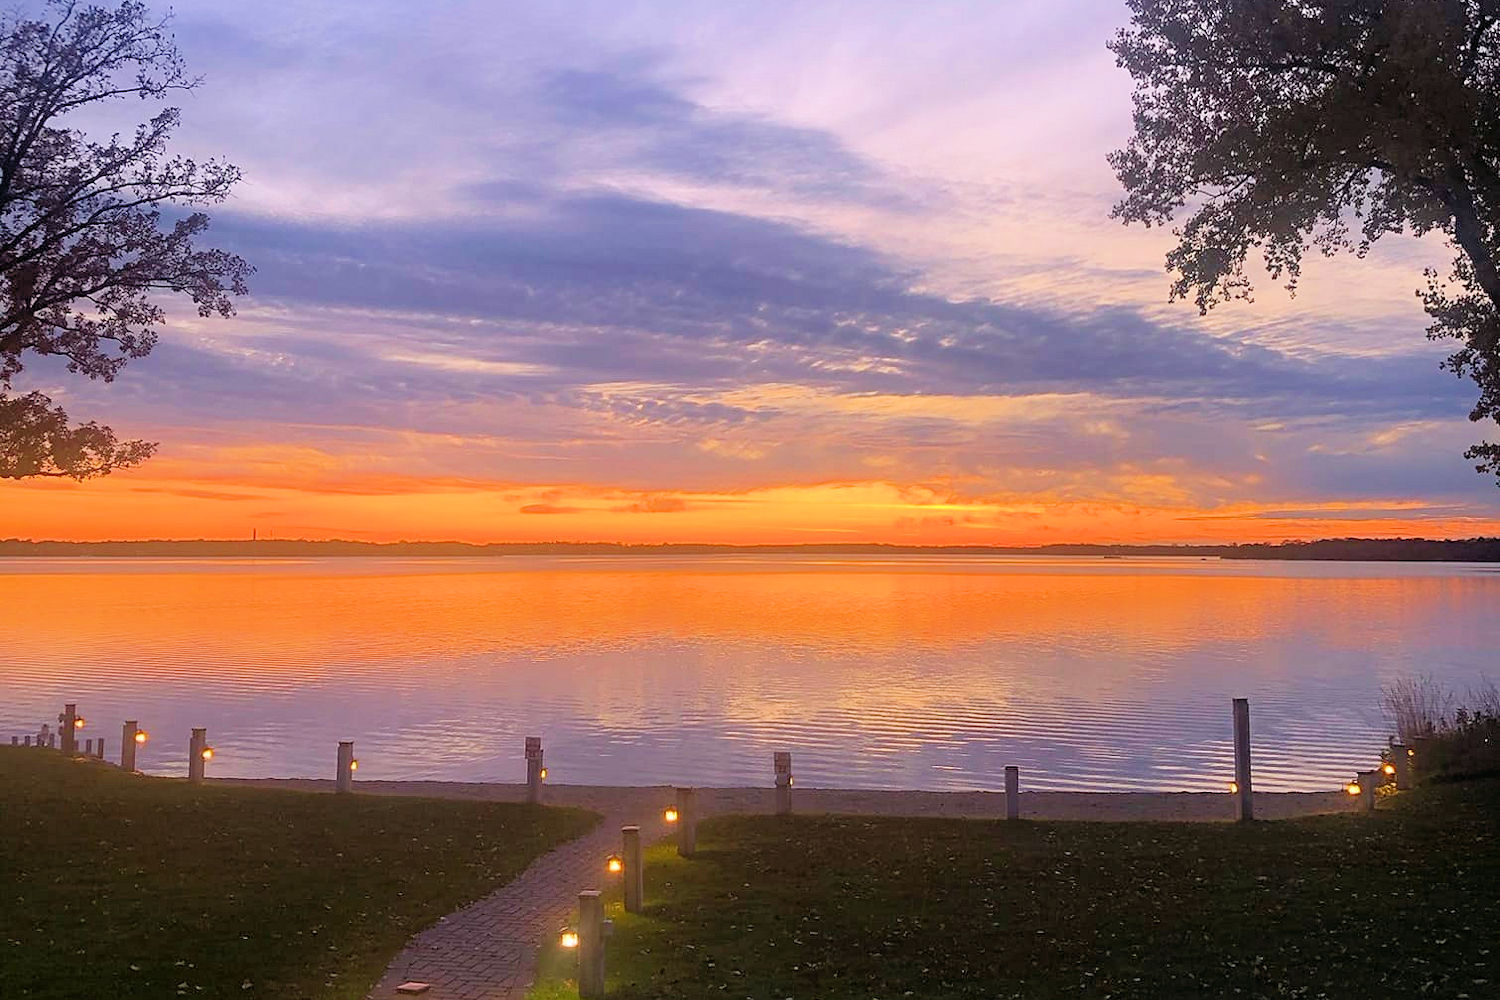 October 14, 2019 Big Detroit Lake Sunset at The Lodge on Lake Detroit